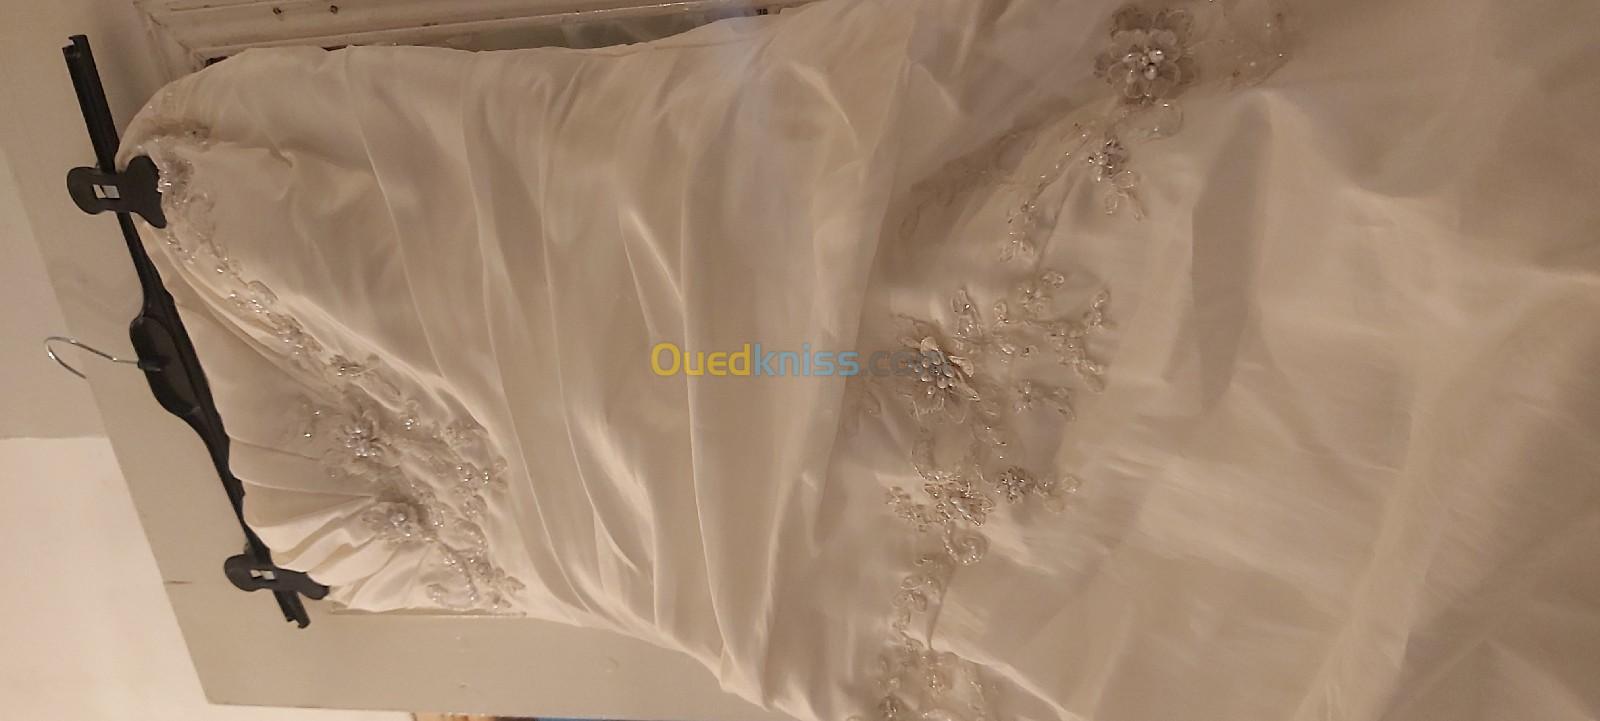 Robe de mariée 4000 dinard